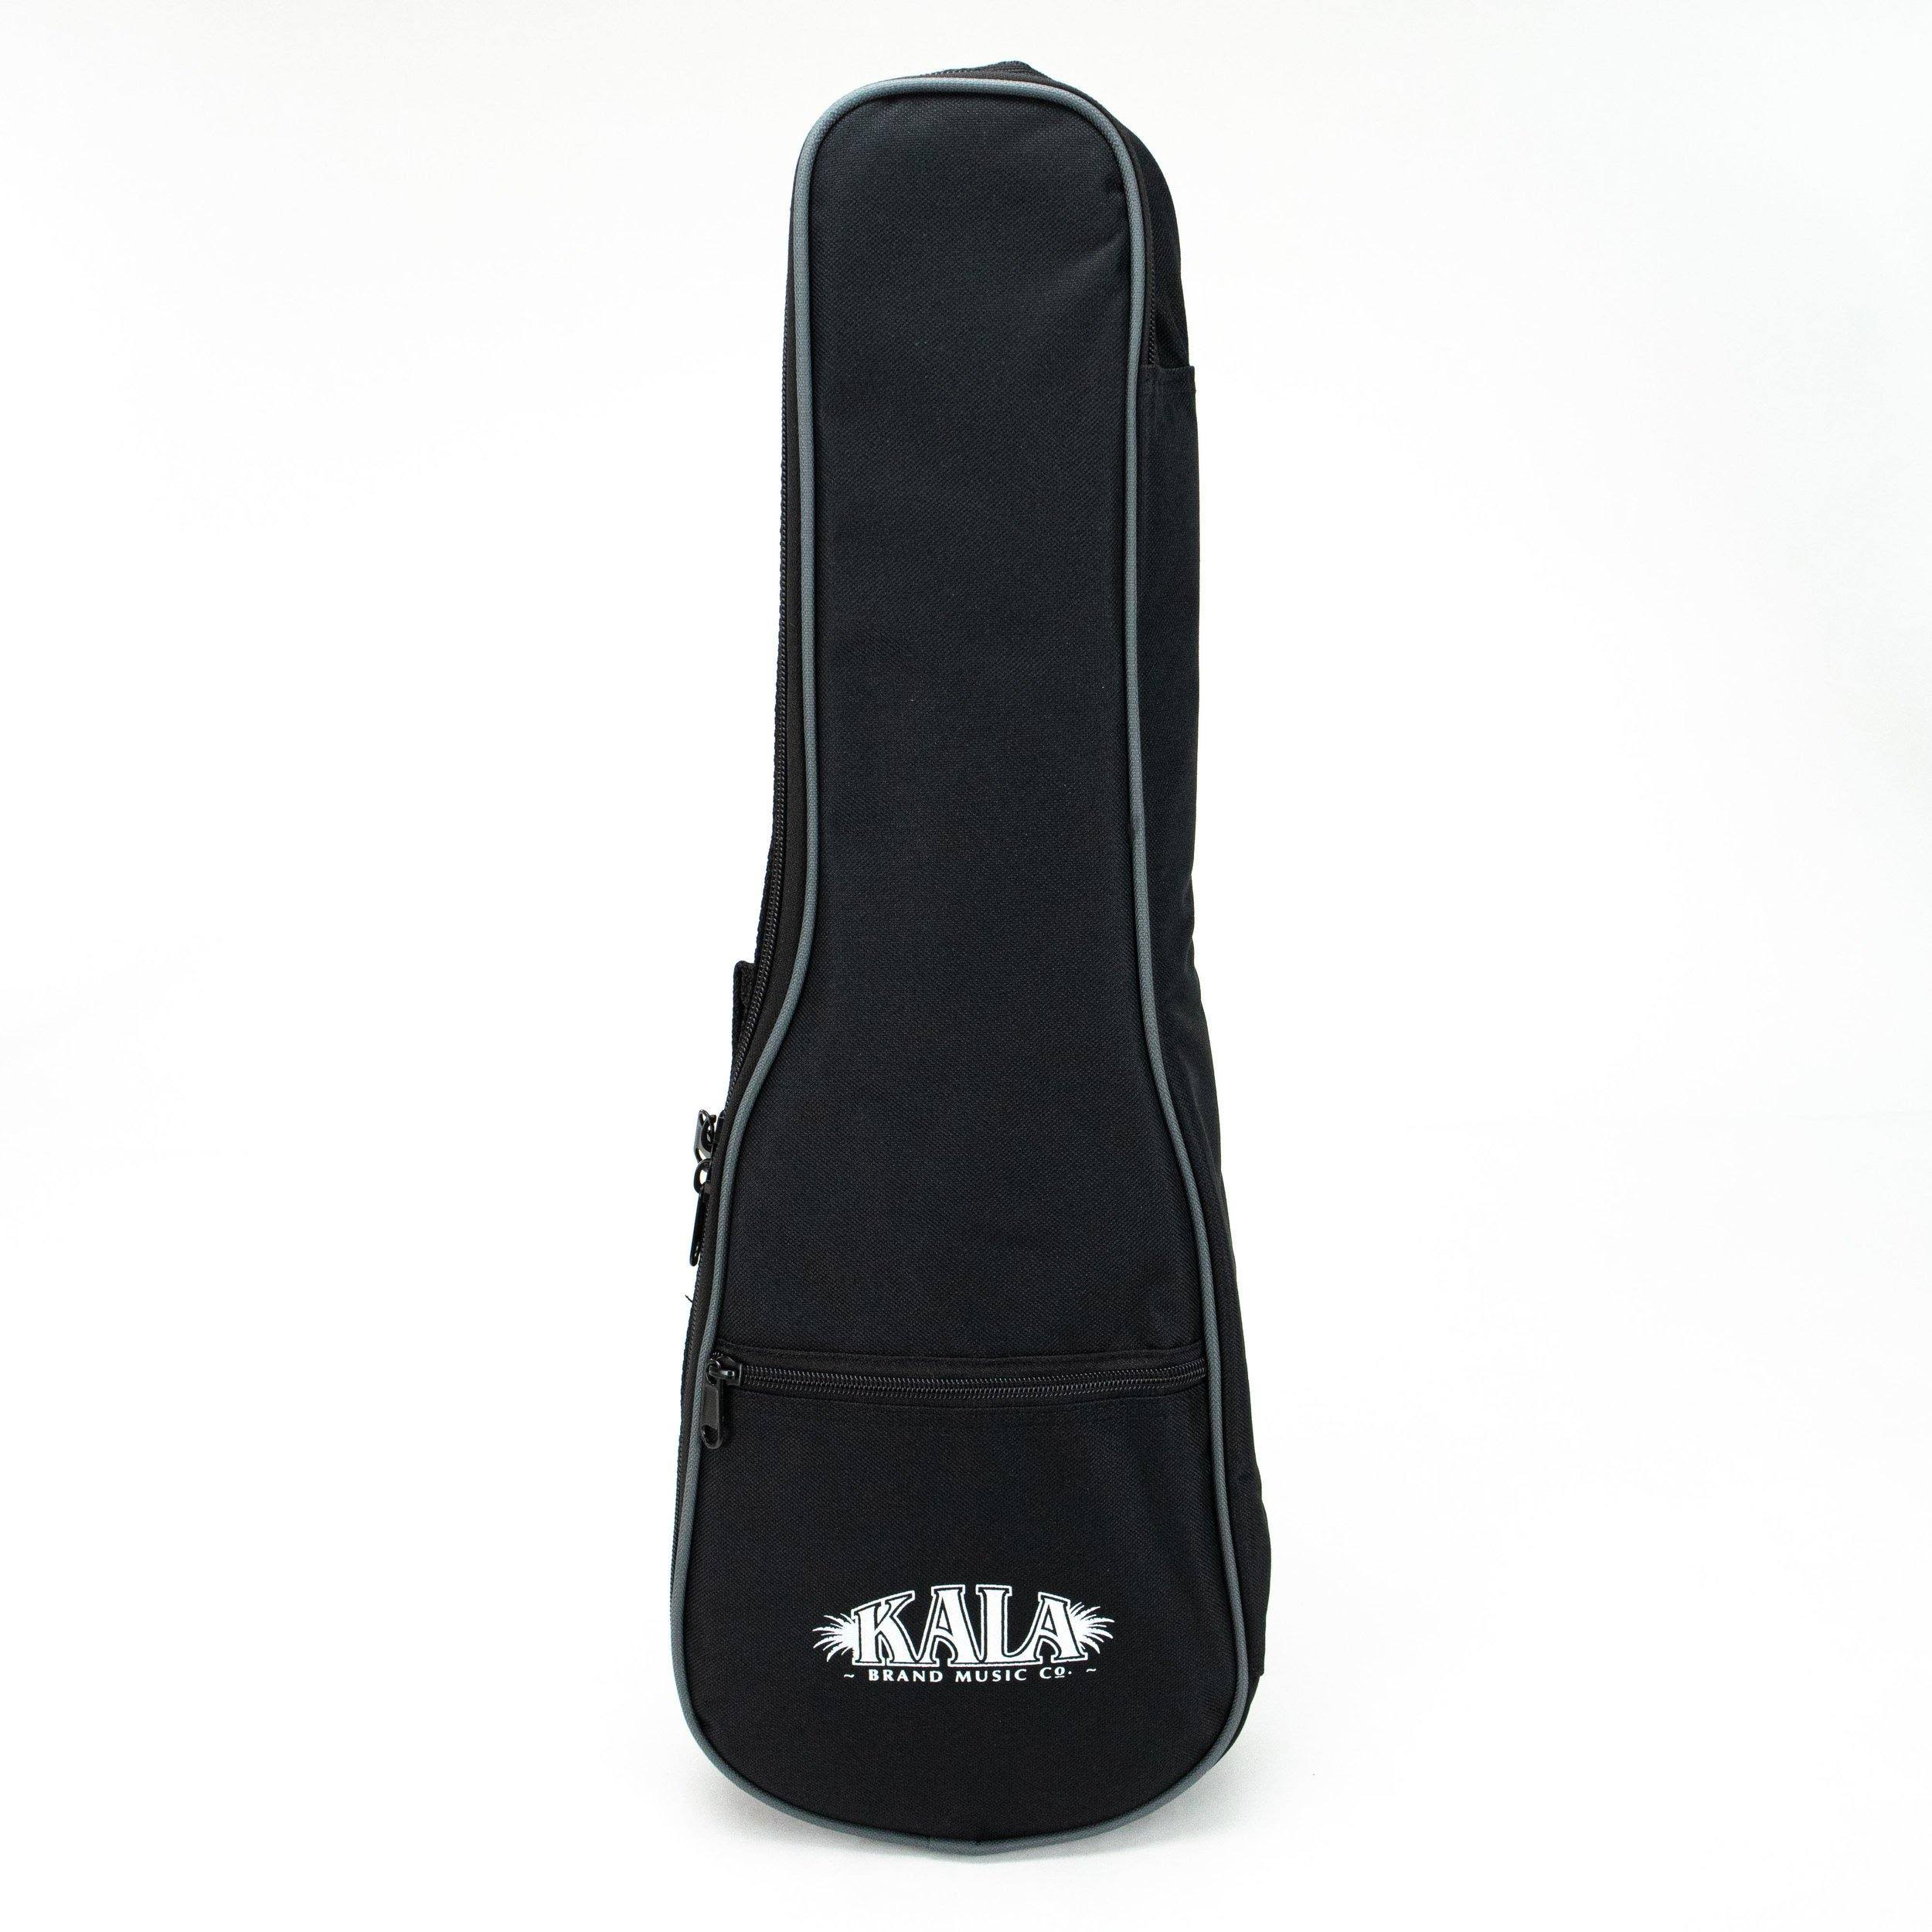 Kala Standard Concert Ukulele Gig Bag Gray Piping Logo, Case Cases